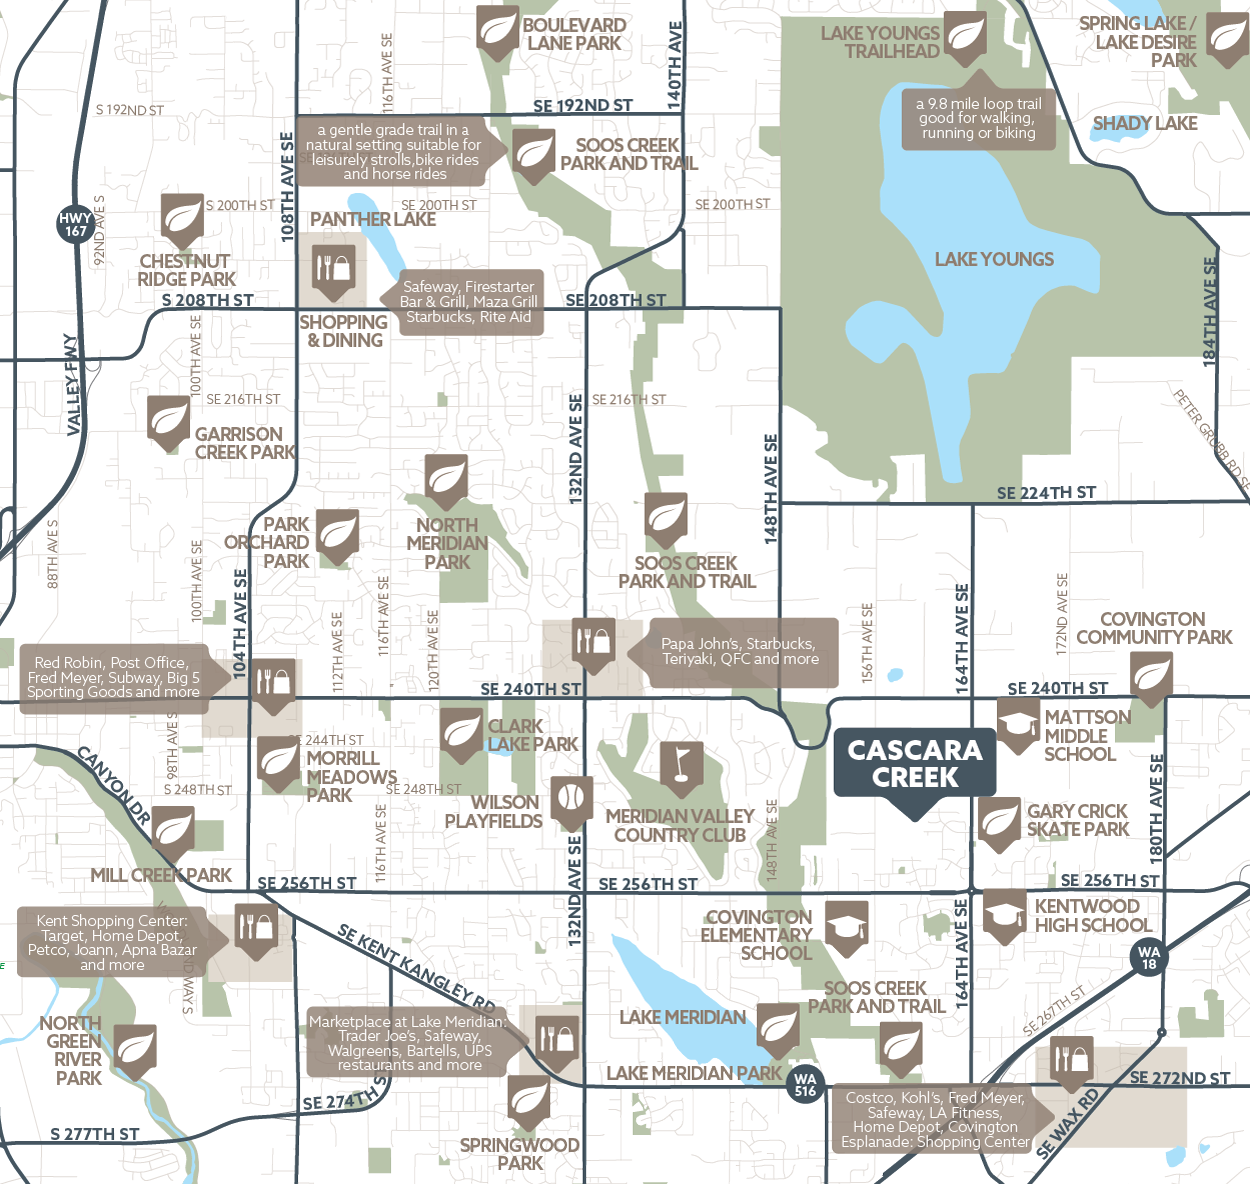 Cascara Creek amenity map